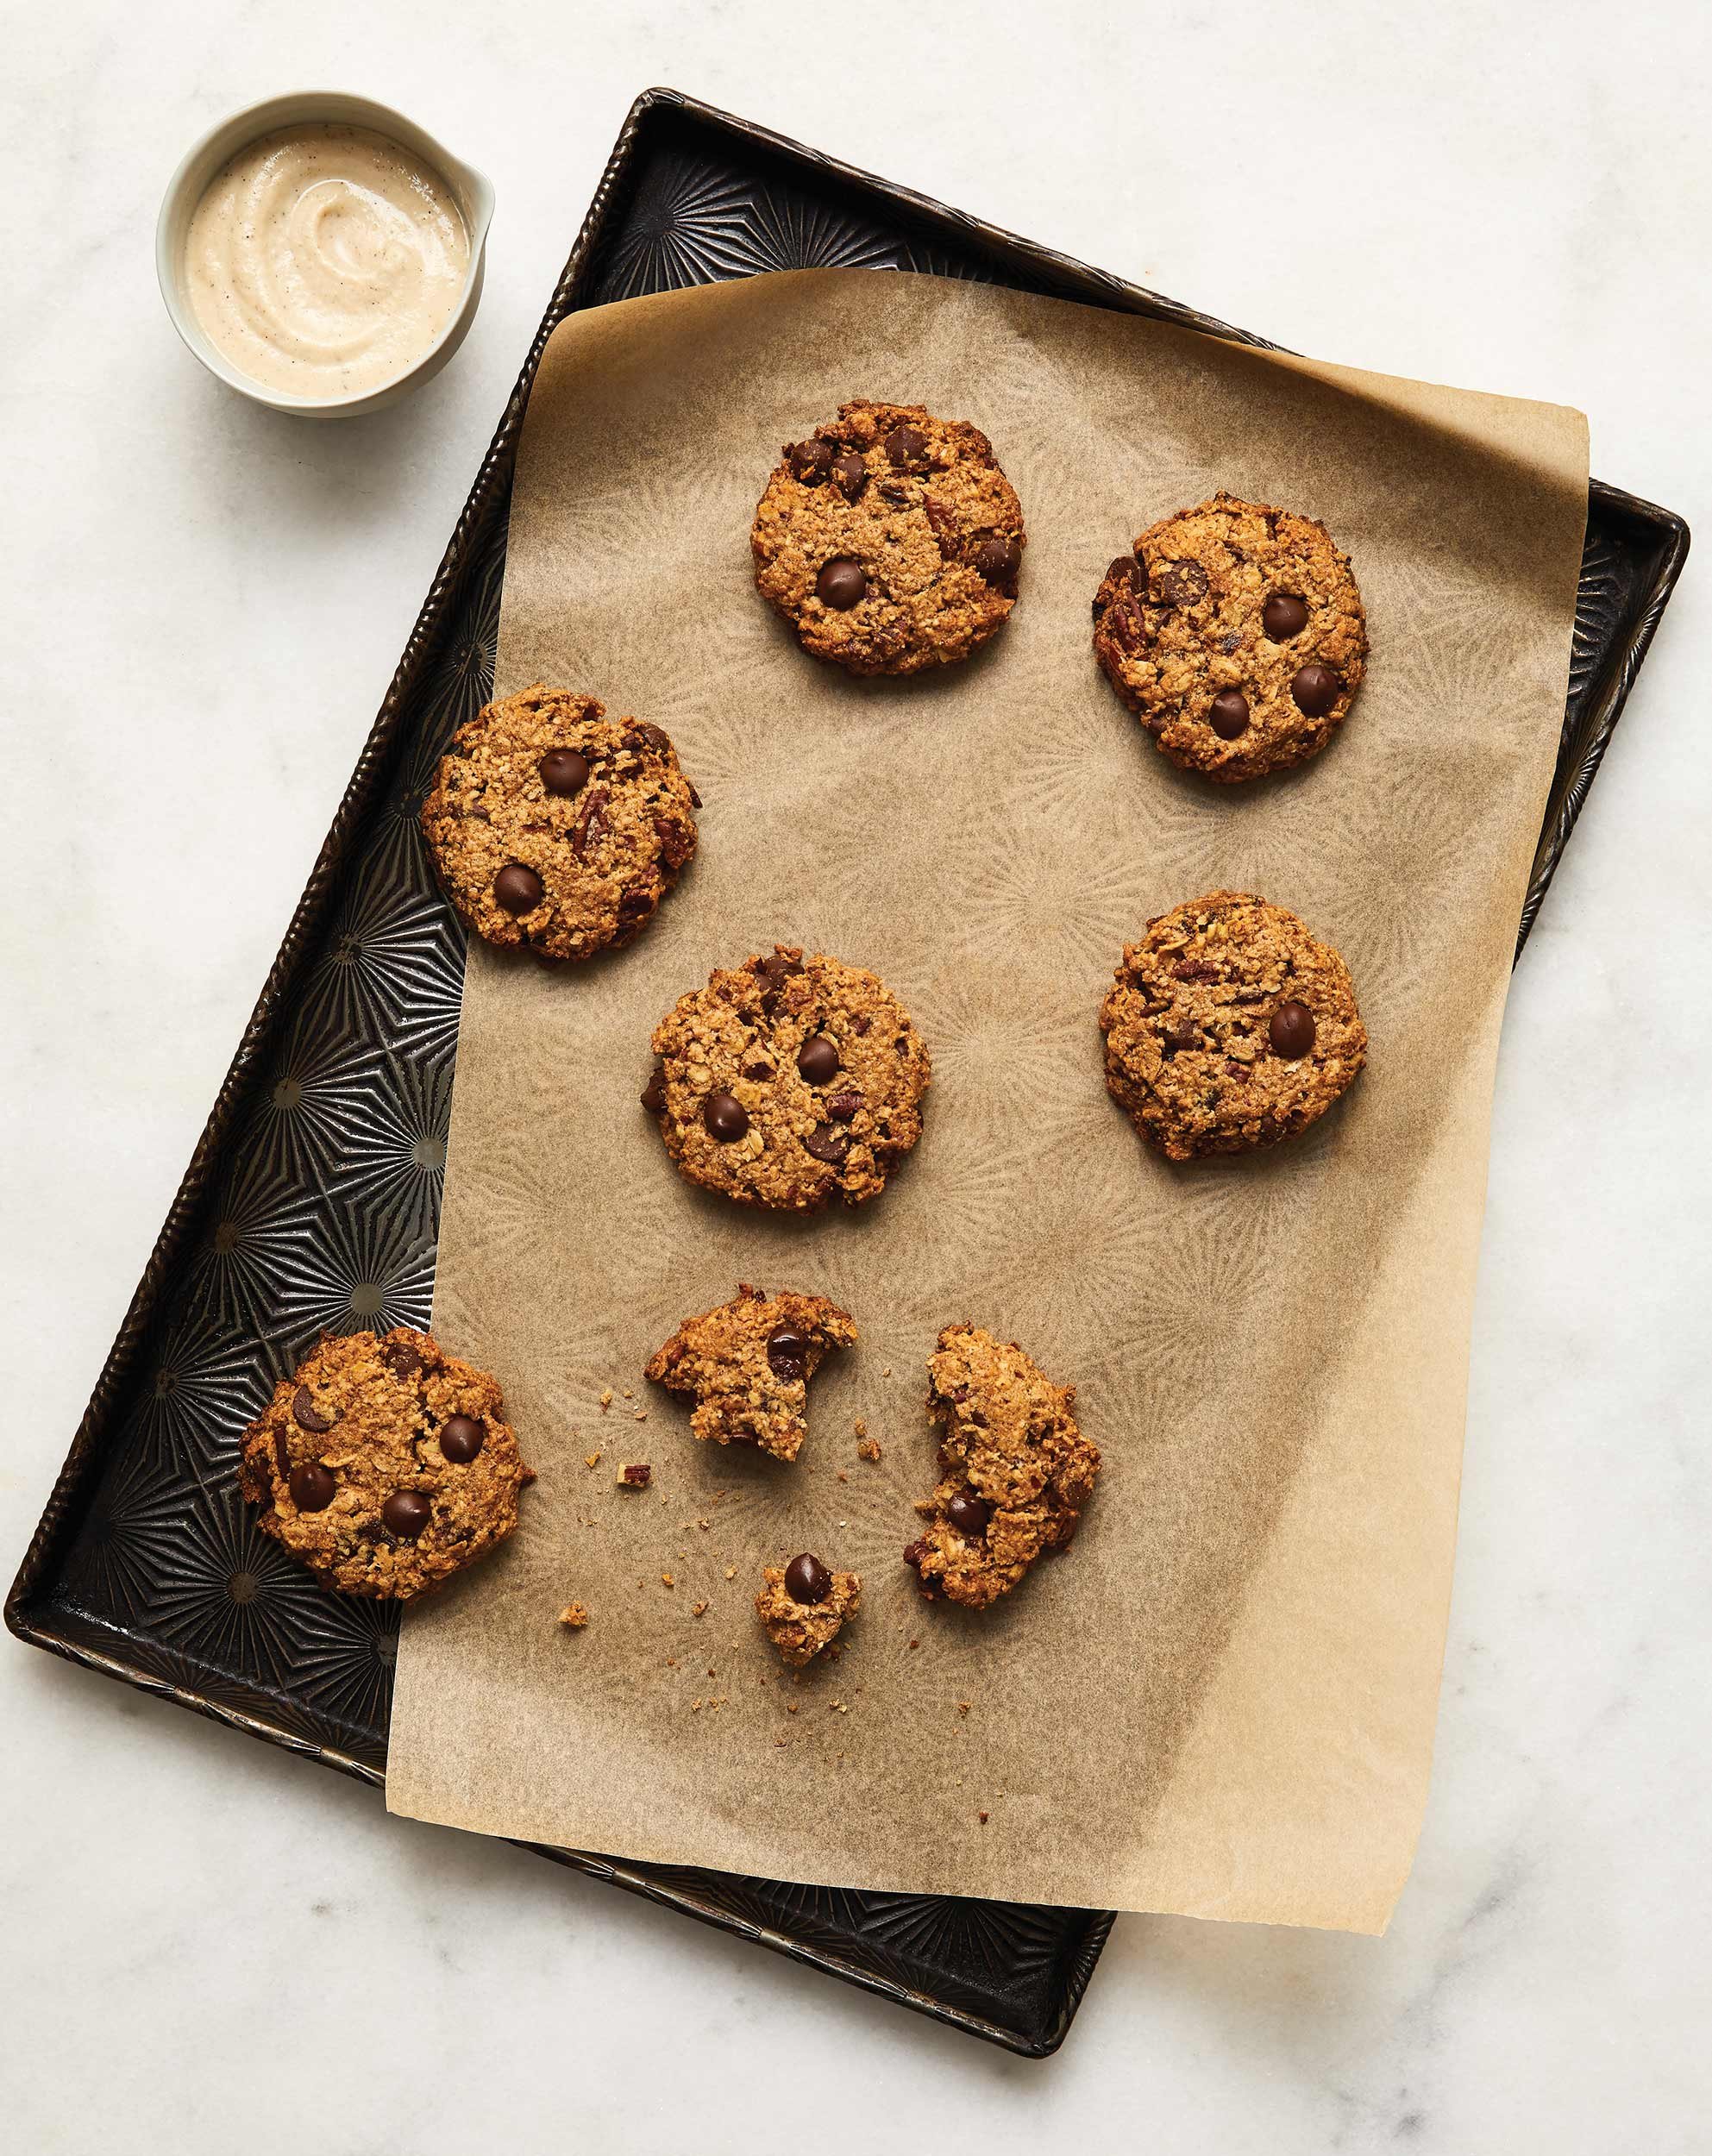 nyc-nj-cookbook-photographer-food-joy-of-balance-divya-alter-cookies.jpg